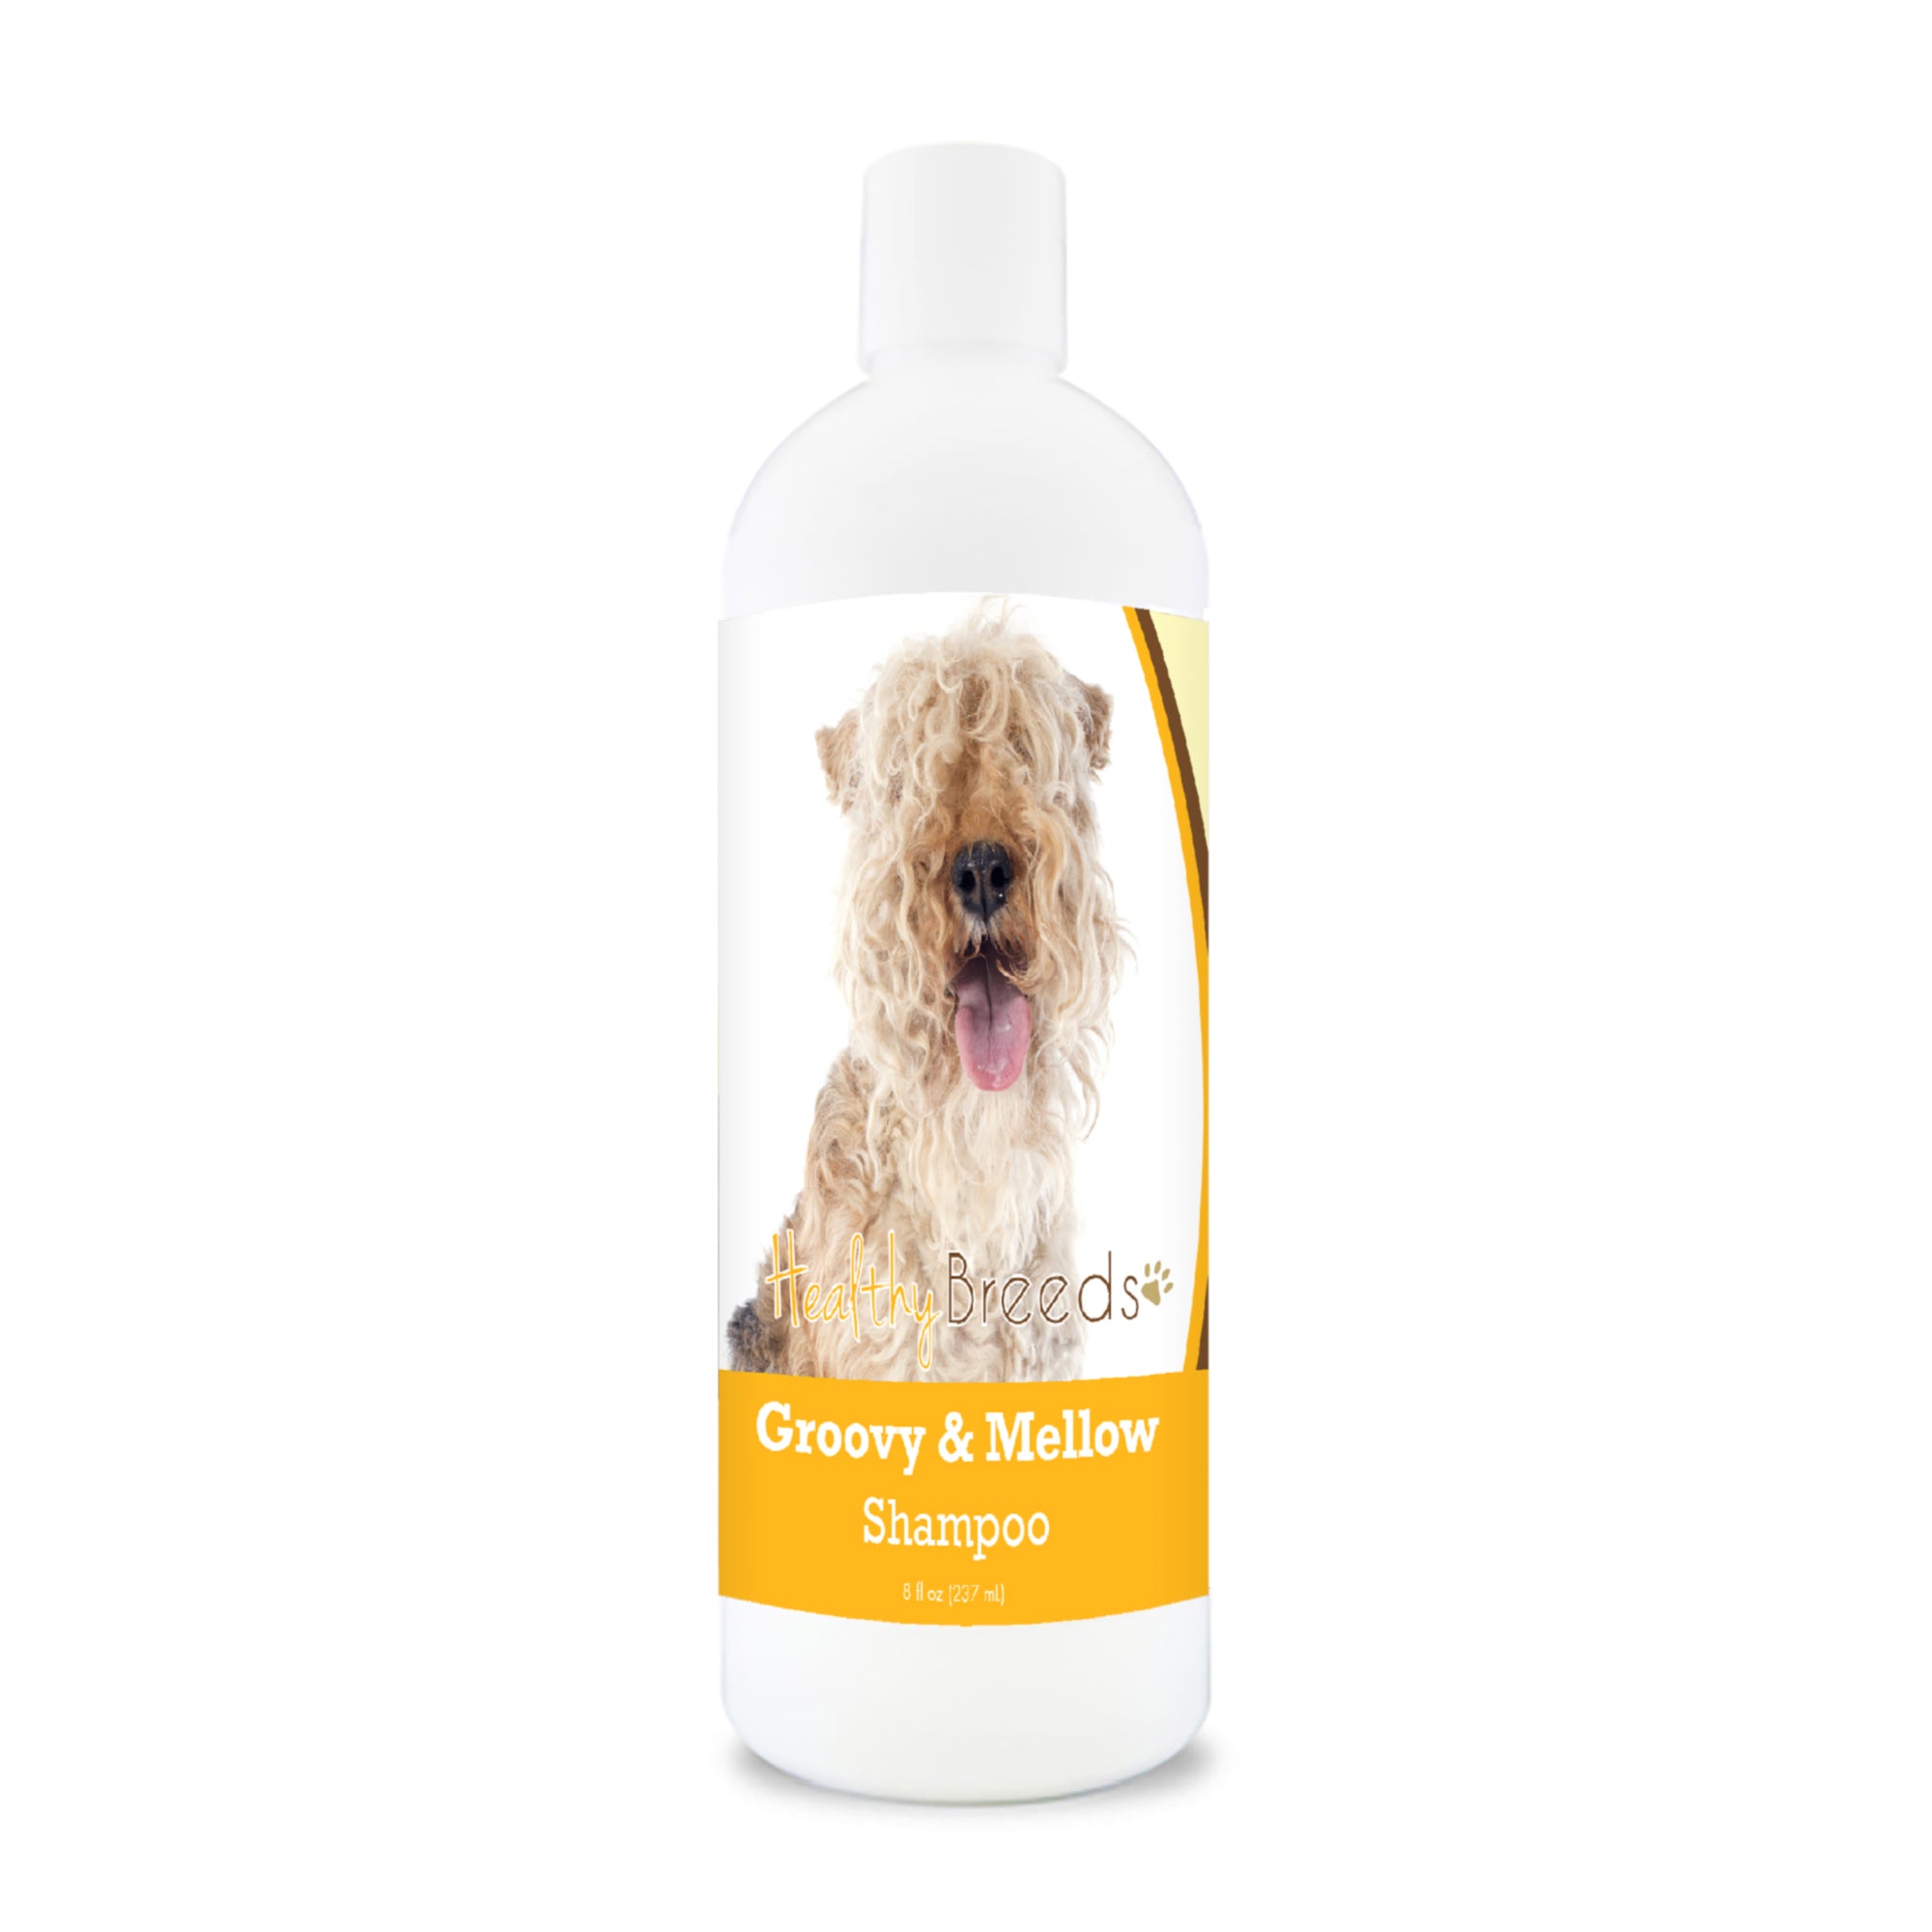 Lakeland Terrier Groovy & Mellow Shampoo 8 oz